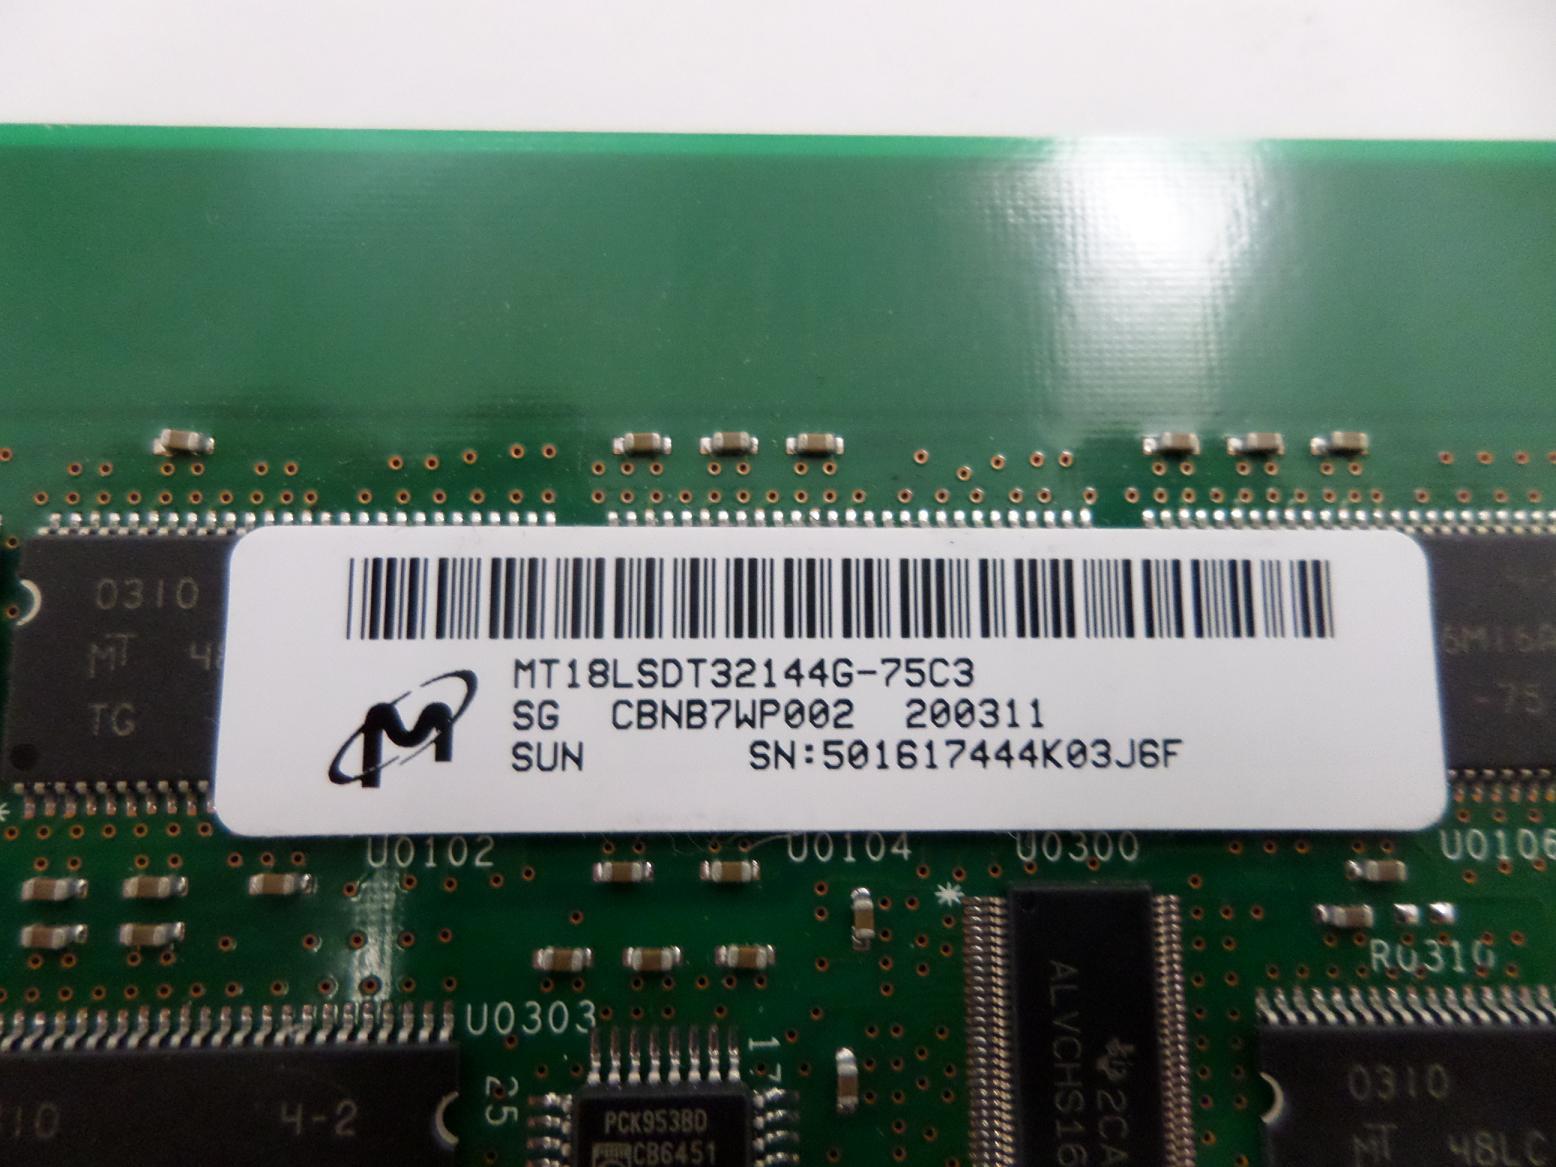 PR23080_MT18LSDT32144G-75C3_Sun/Micron 512MB PC100 SDRAM 100MHz 232-Pin DIMM - Image3